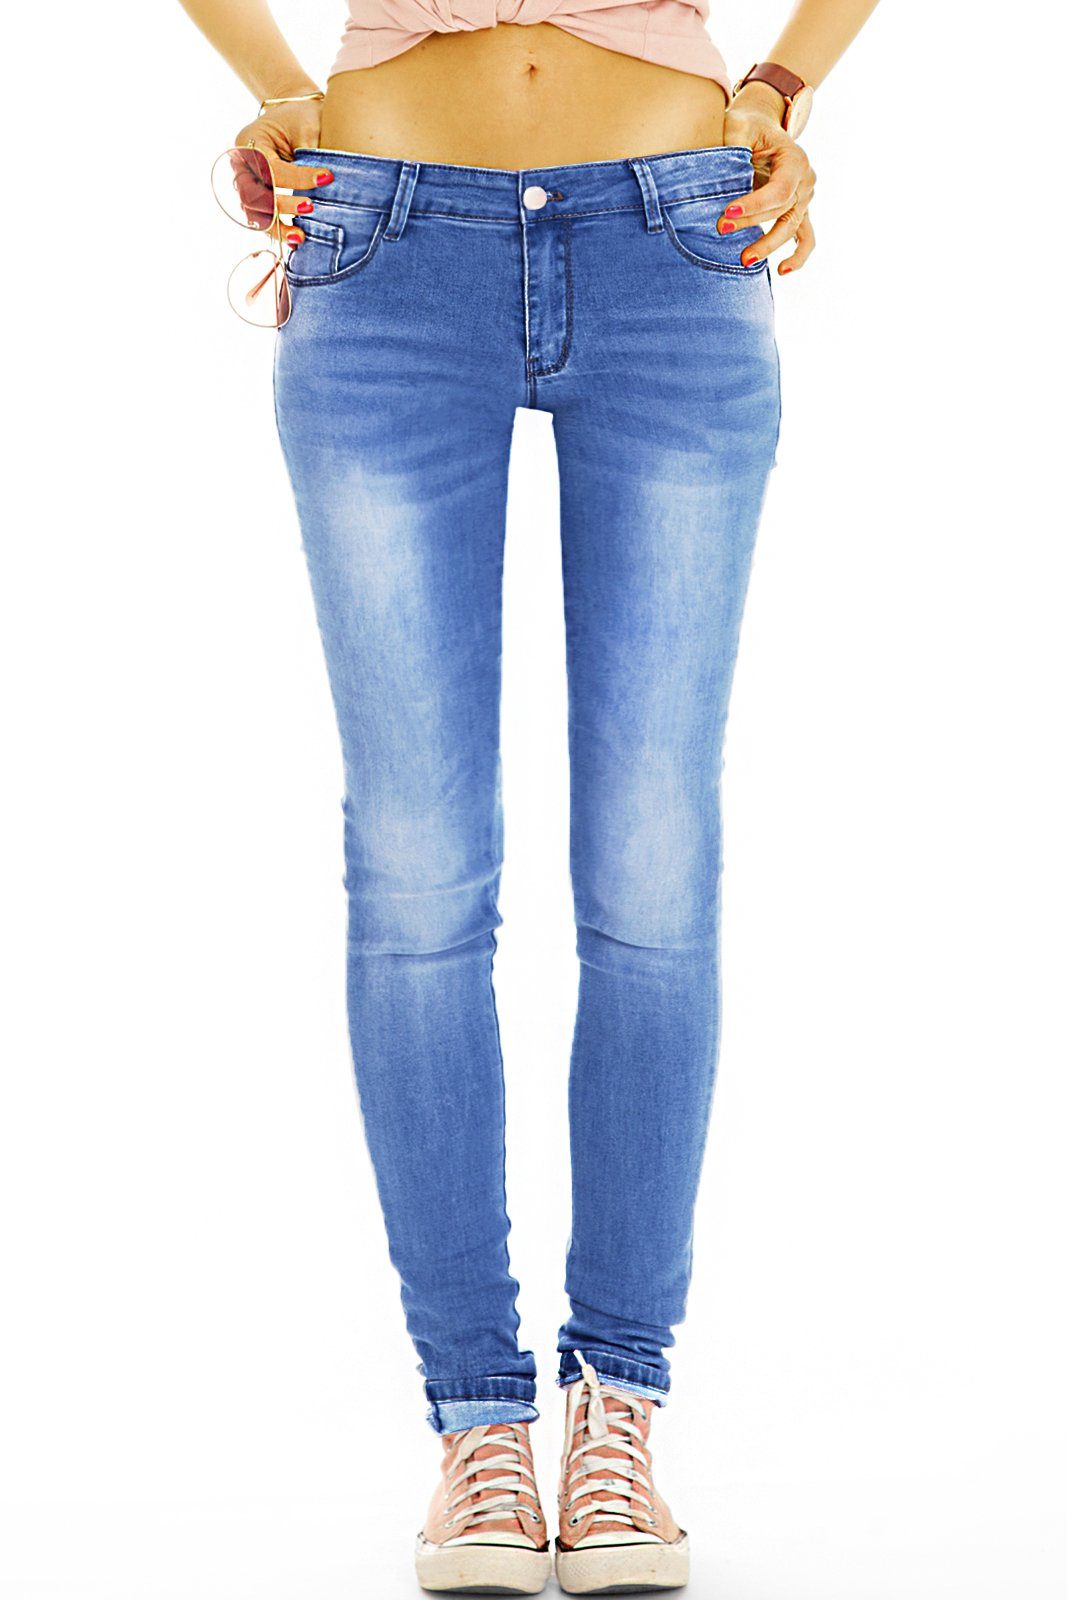 Low-rise-Jeans 5-Pocket-Style Hose - Hüftjeans Leibhöhe Low - niedrige mit Stretch-Anteil, Jeans dunkelblau Damen be j36p Rise styled